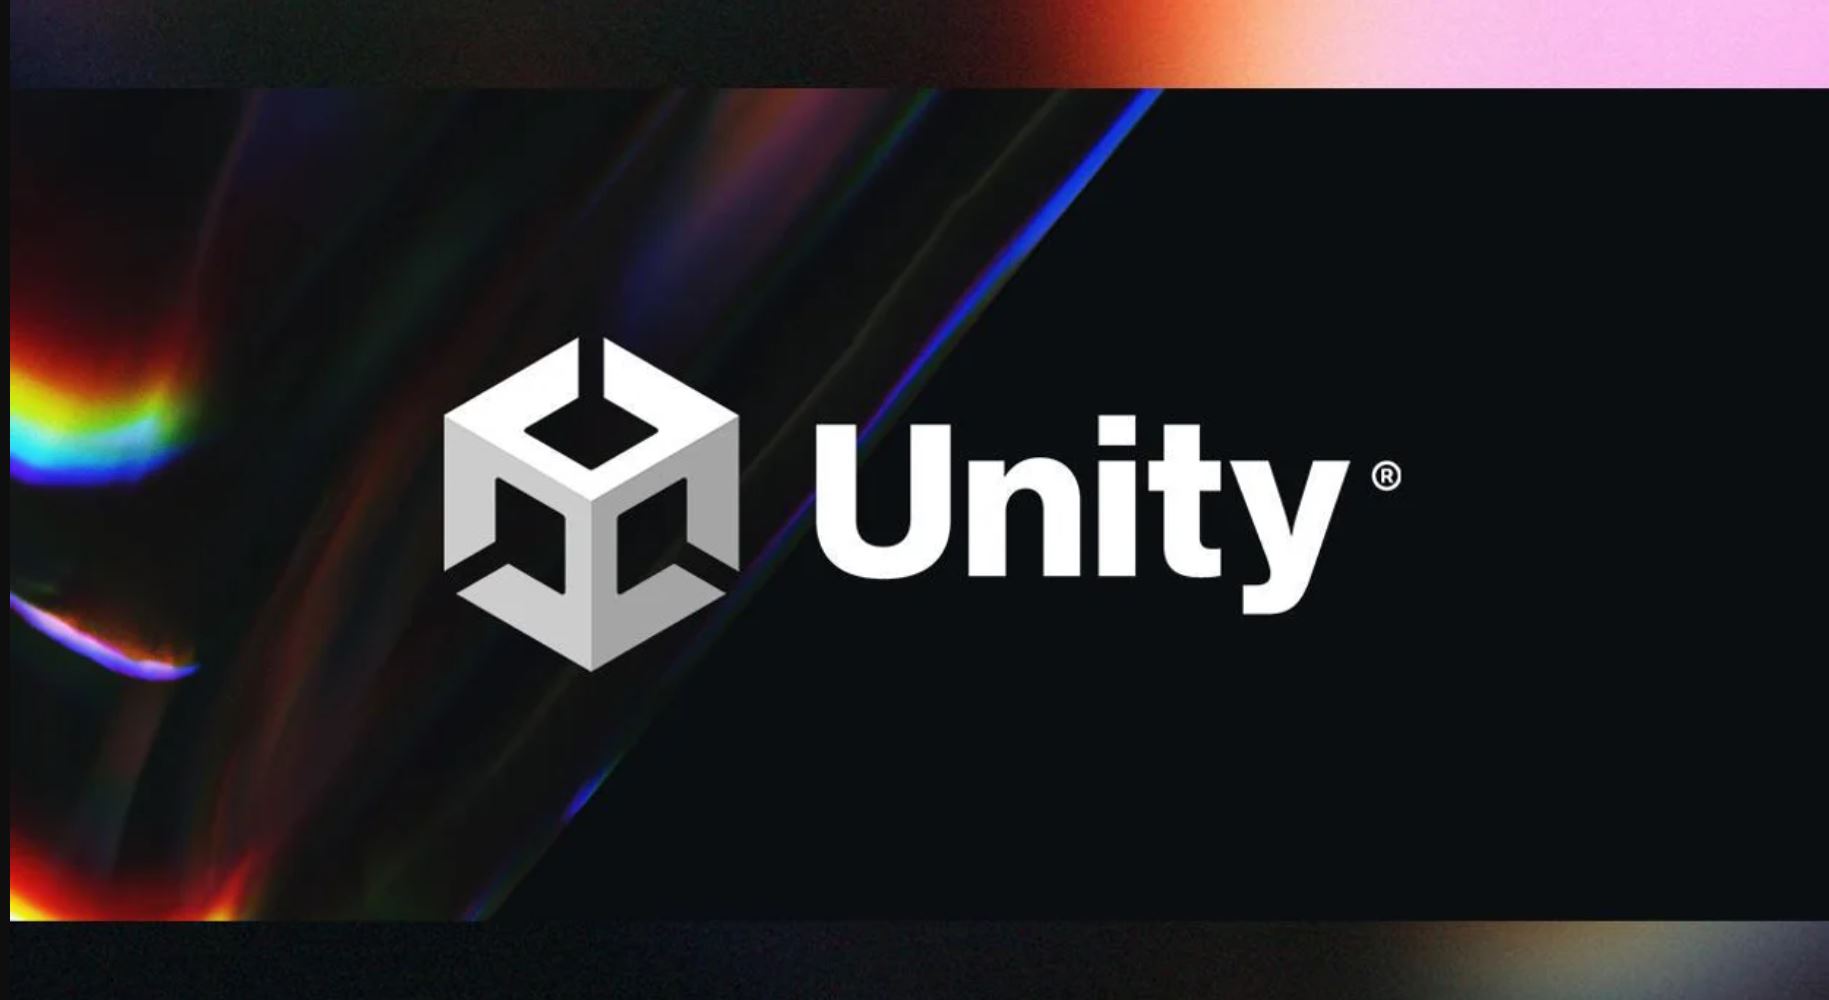 The Unity logo